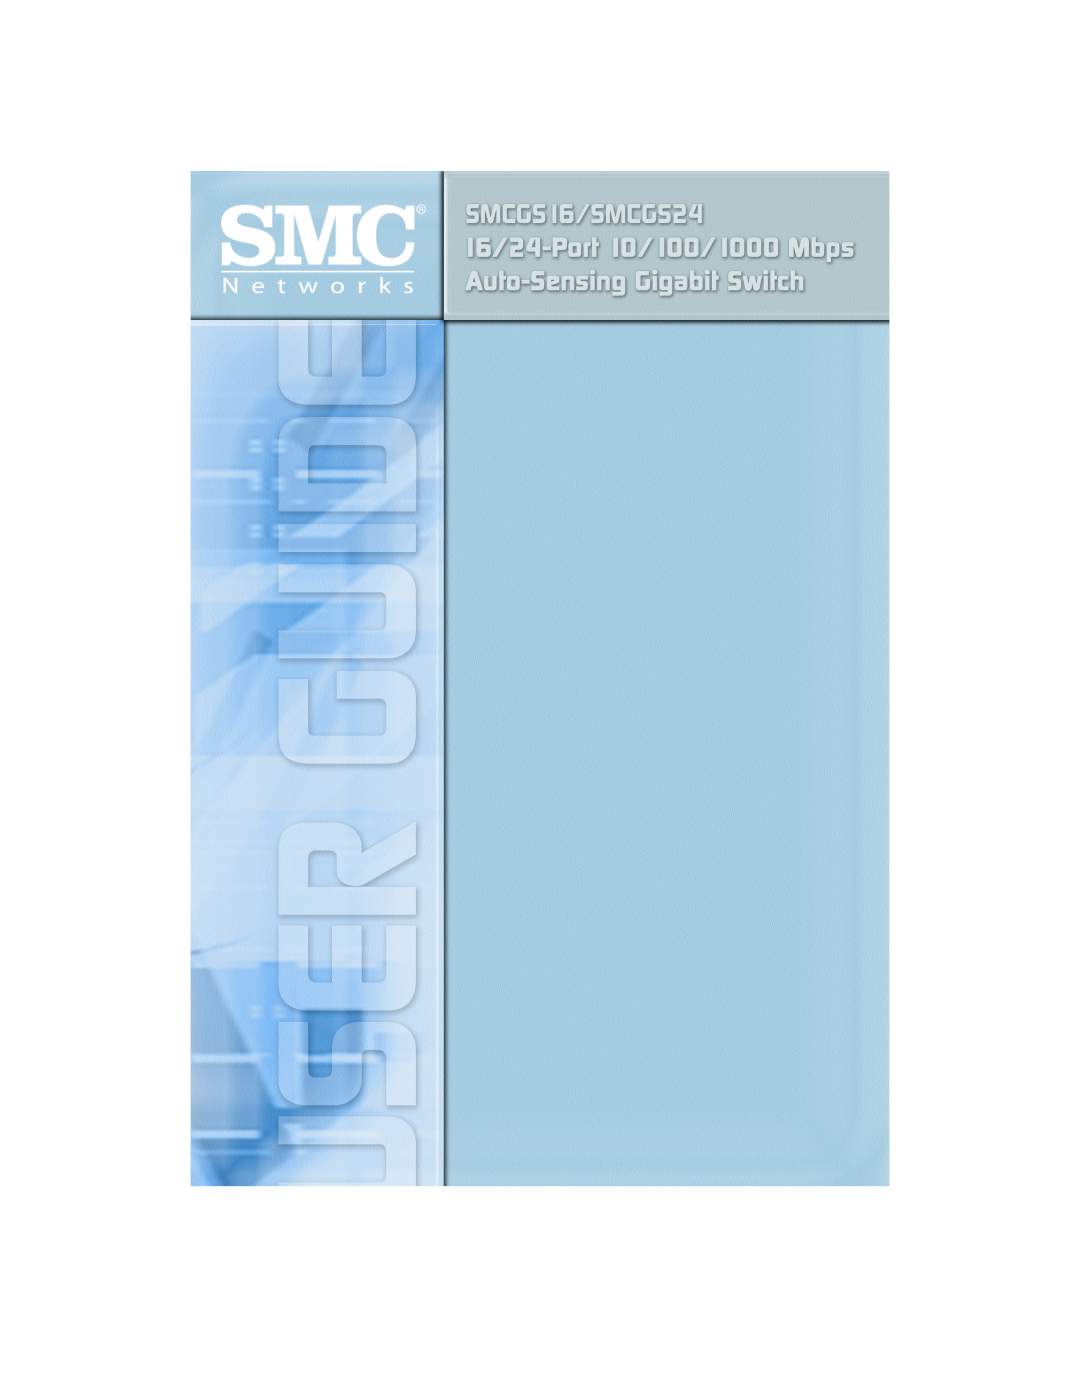 SMC Networks SMCGS24 manual 